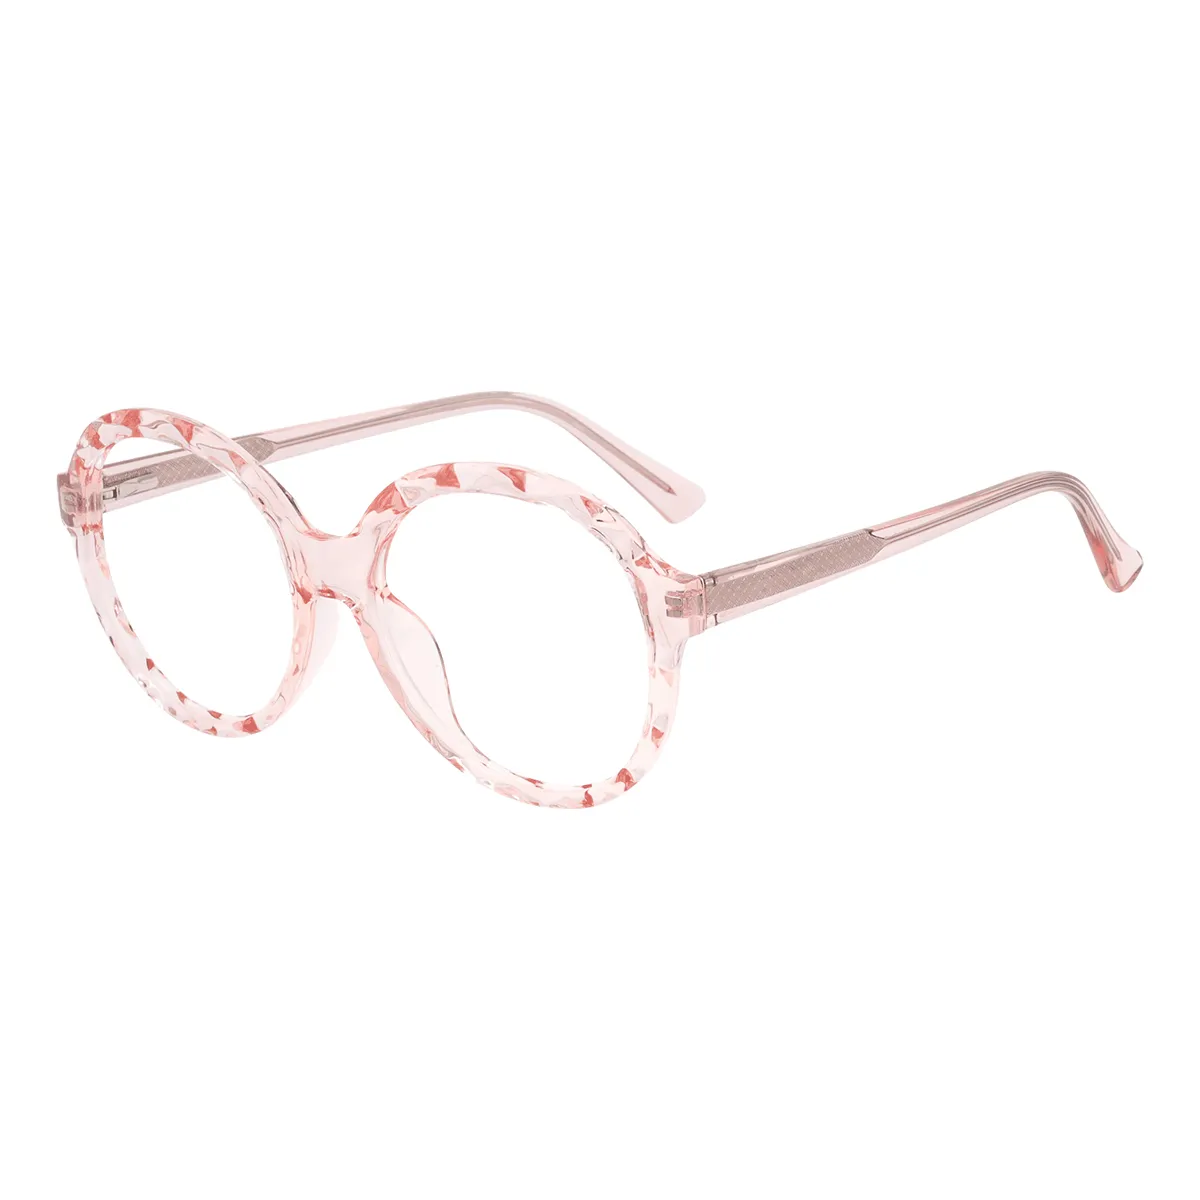 Fashion Round Transparent-Tawny Reading Glasses for Women